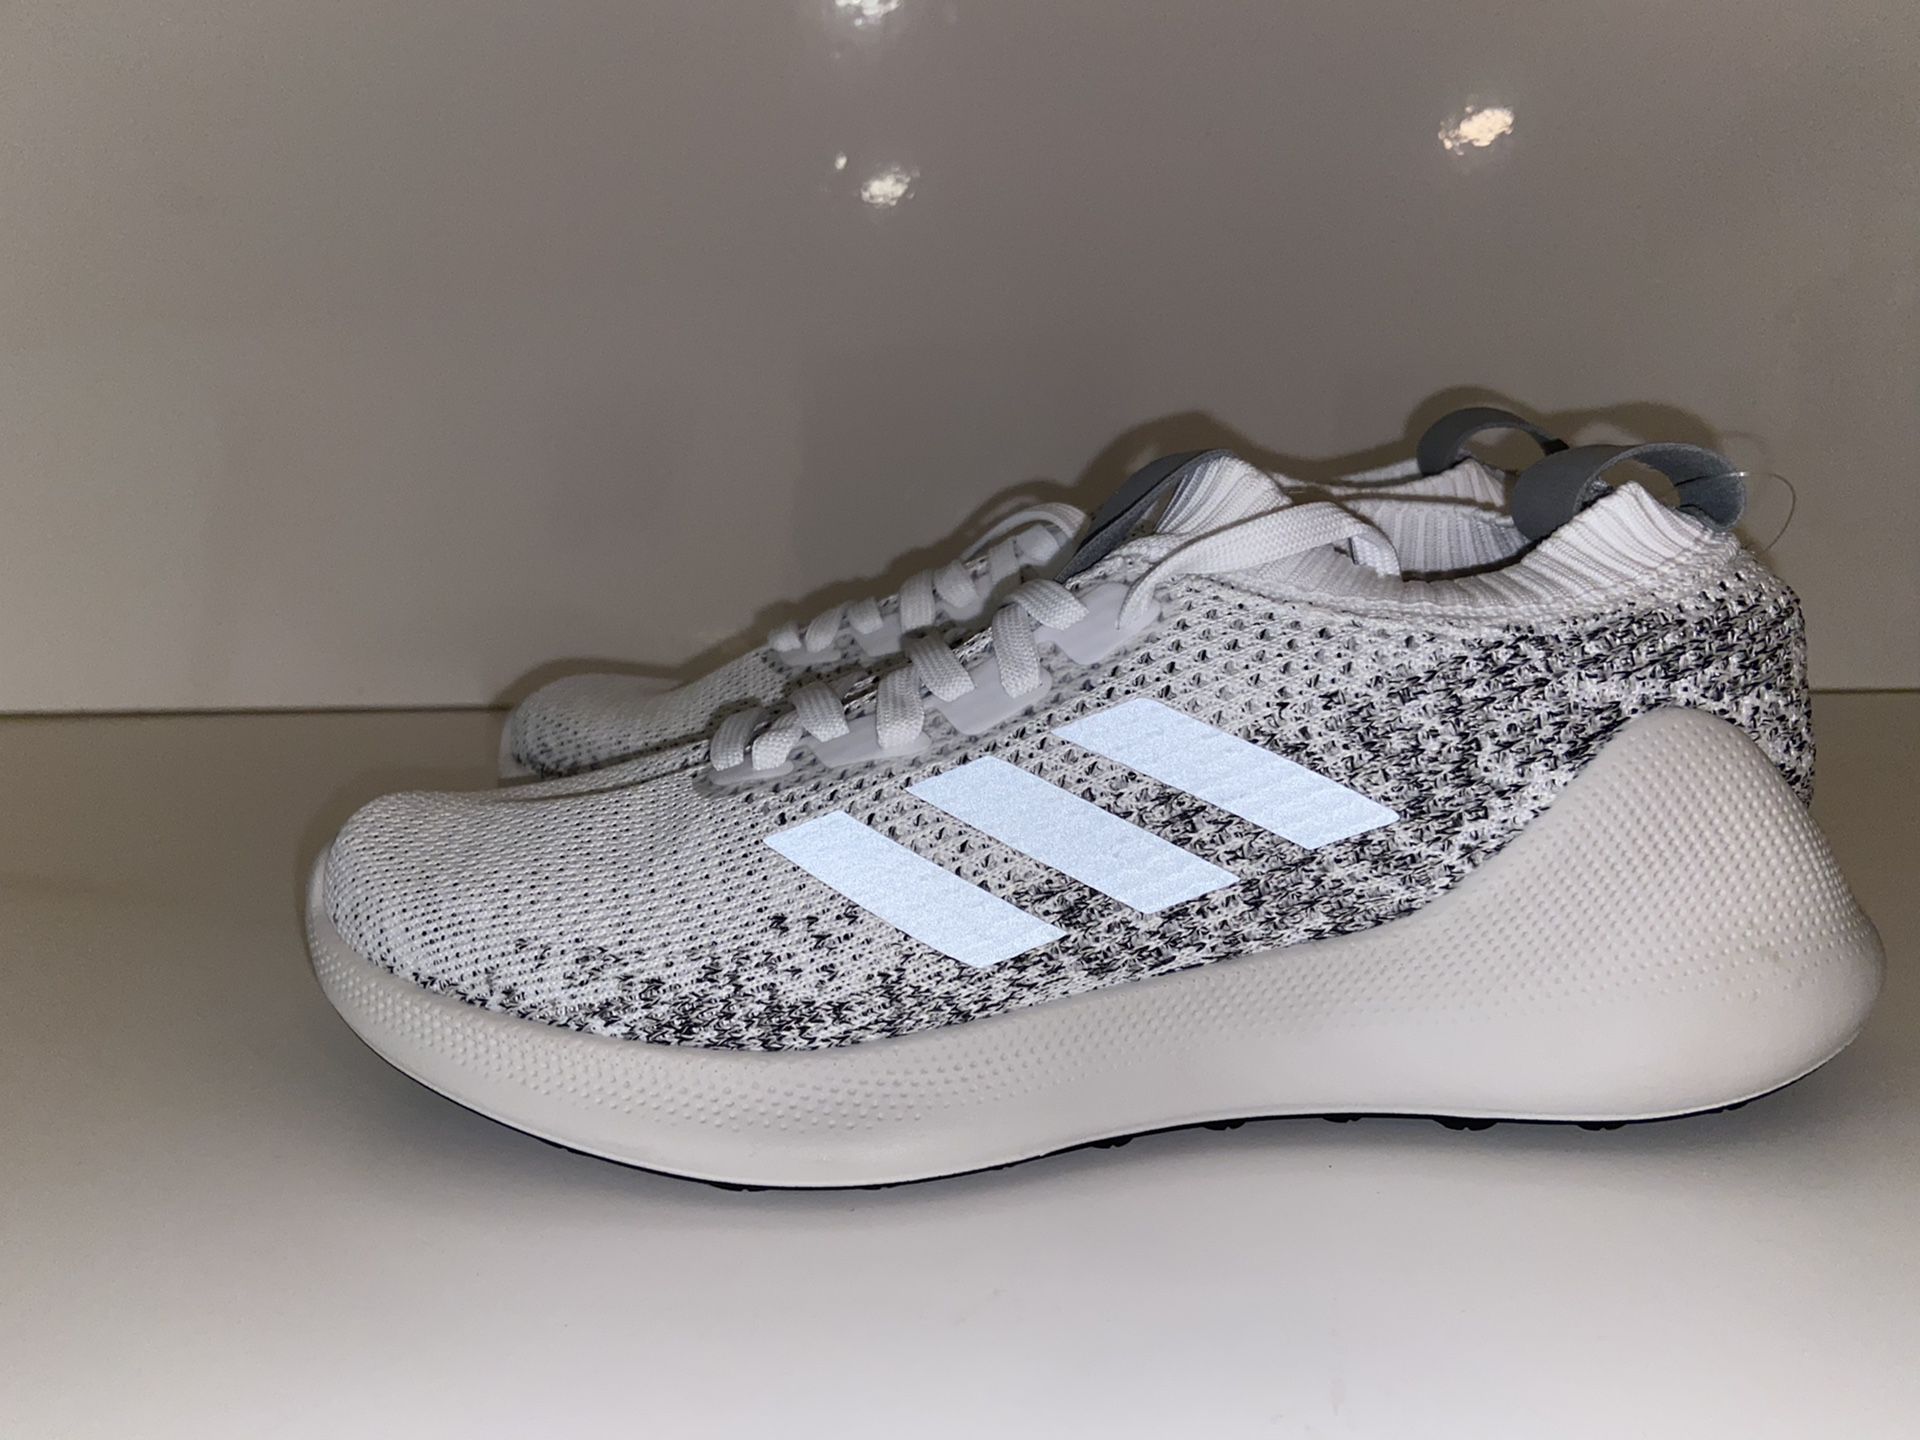 Adidas purebounce+ Mens Running Shoe Size 8 Brand New White/Grey